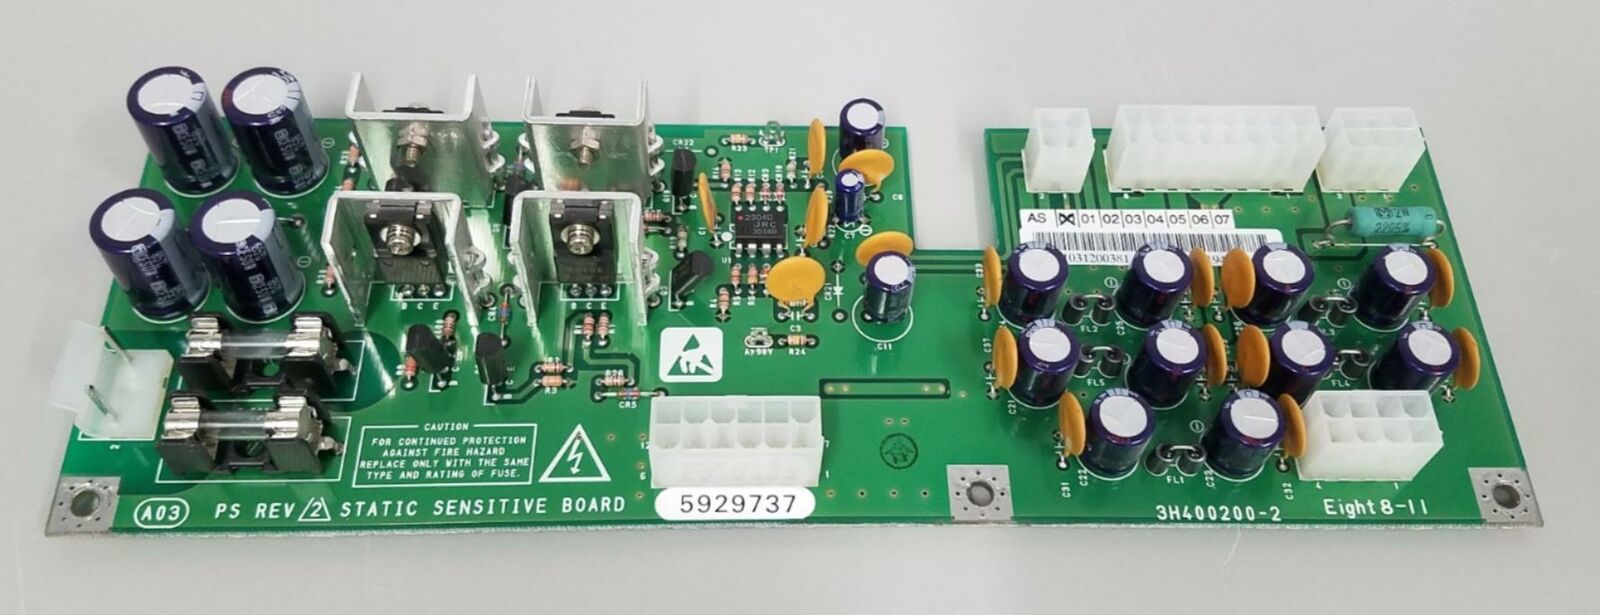 Siemens Ultrasound Sonoline Adara 3H400200-2 Rev 2 Board